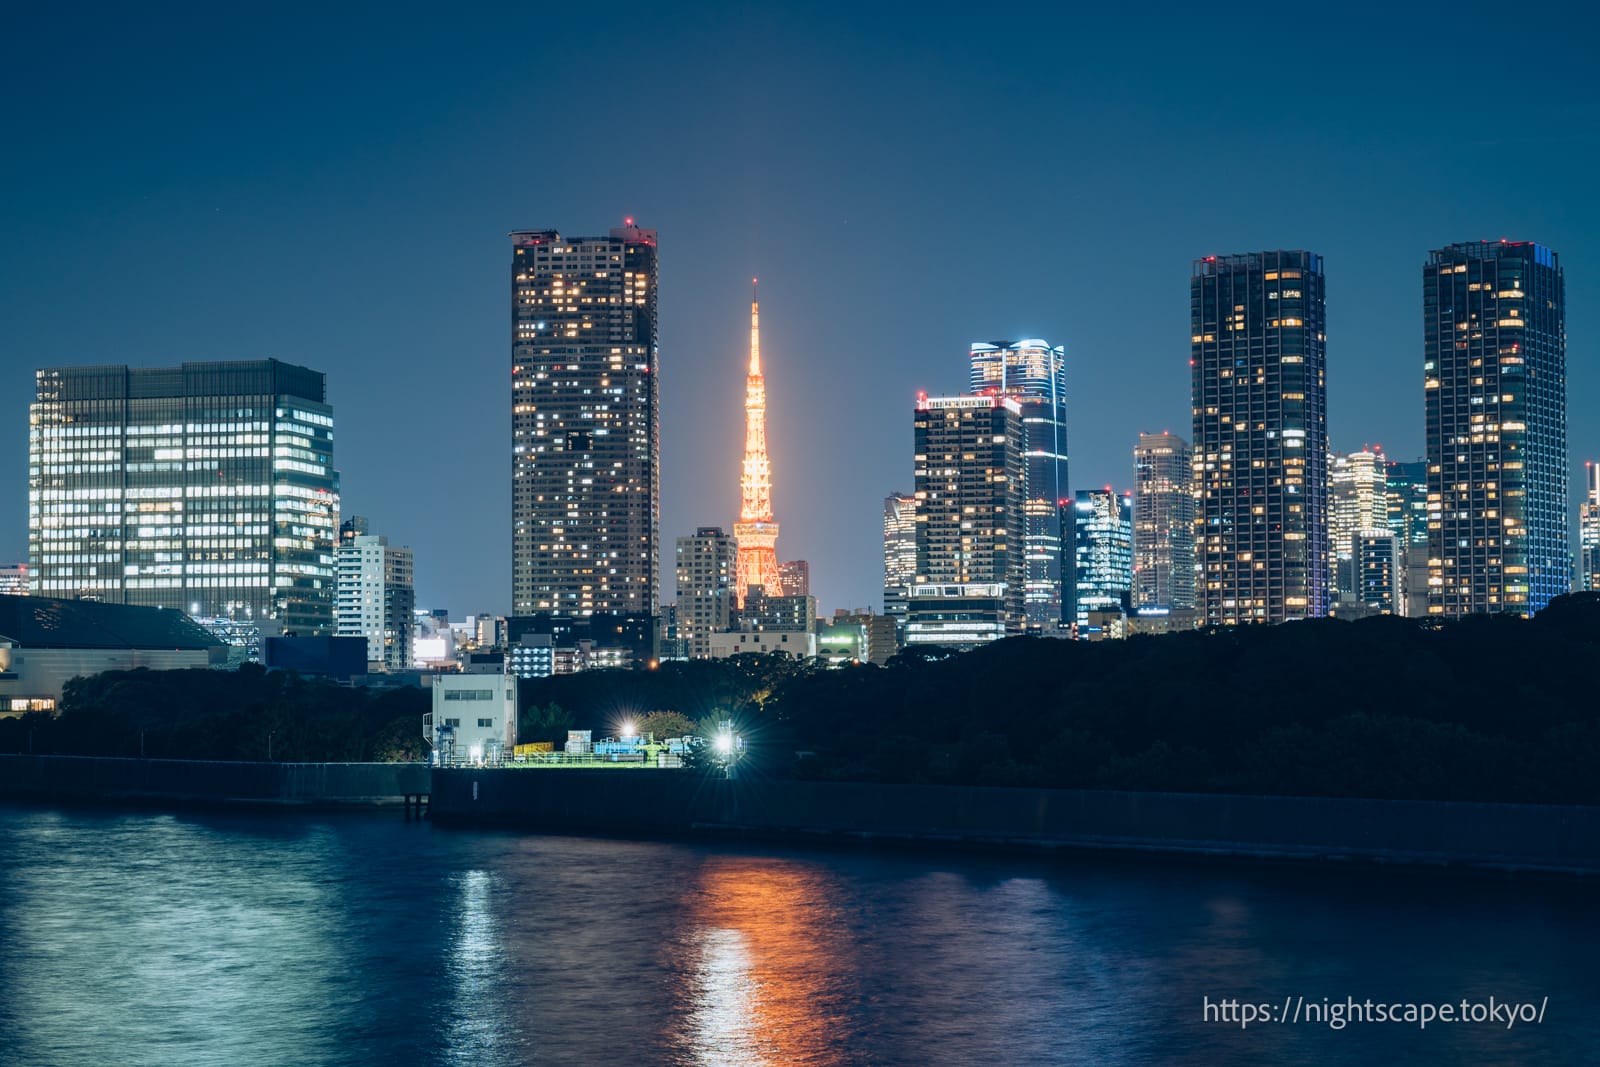 Tokyo Tower viewed from the Tsukiji Bridge.